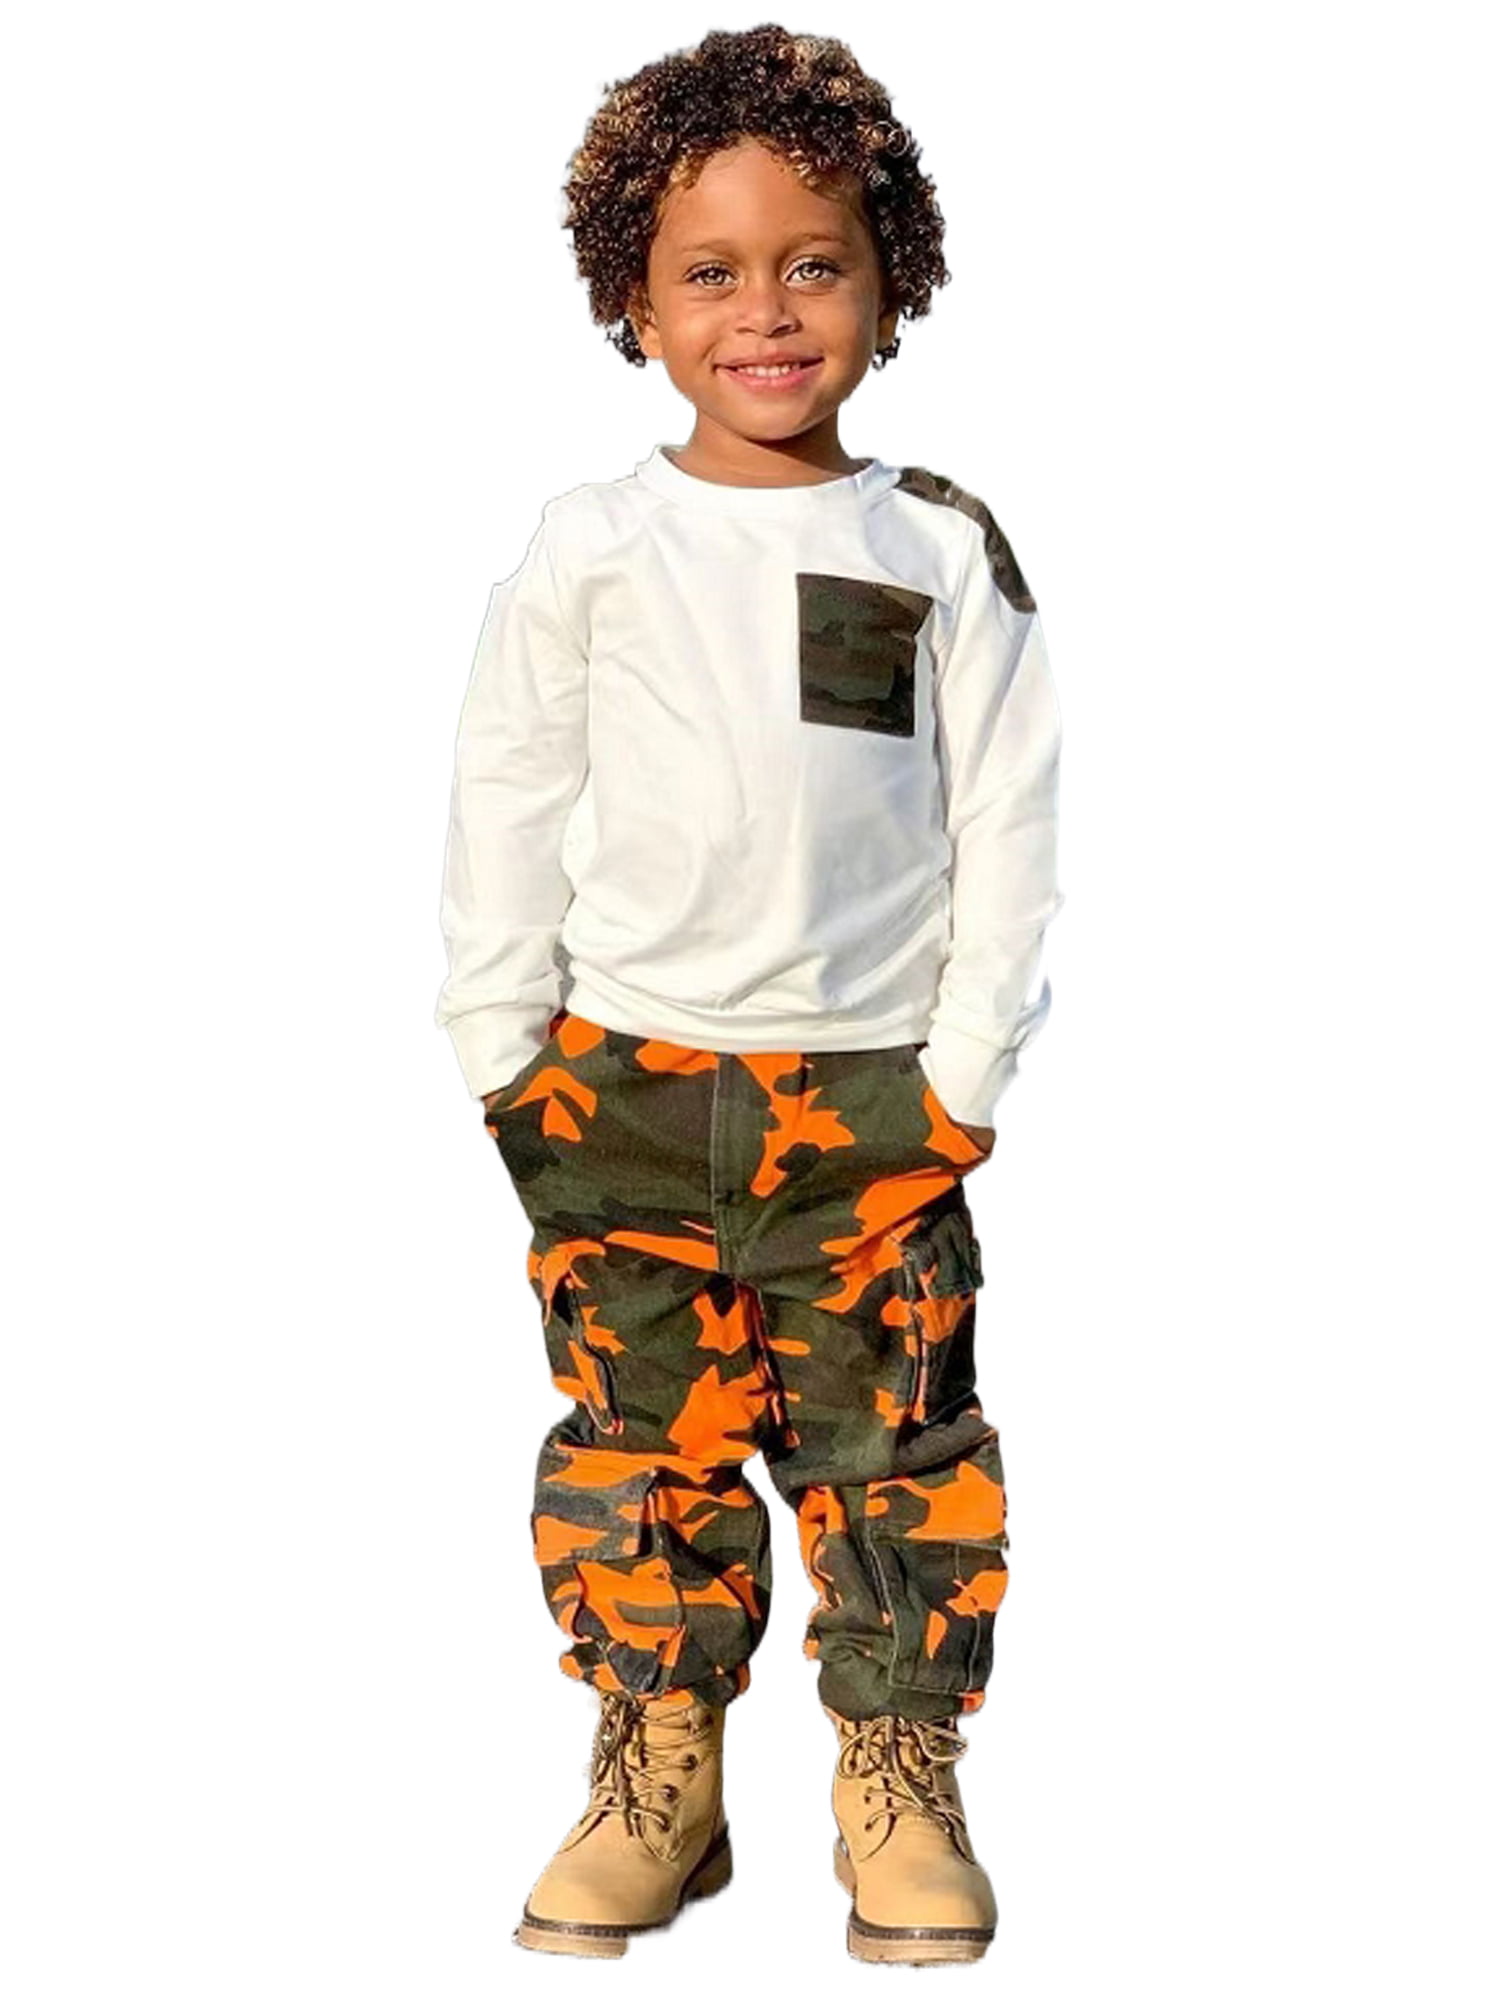 Ma Baby Toddler Boys Girls Long Sleeve Sweatshirt Tops Camouflage Jogger Pants 2Pcs Tracksuit Outfits e3a5180c d179 44bb b98a 9369b10dfc40.00174fda83365e3d715a12ea4f49de51